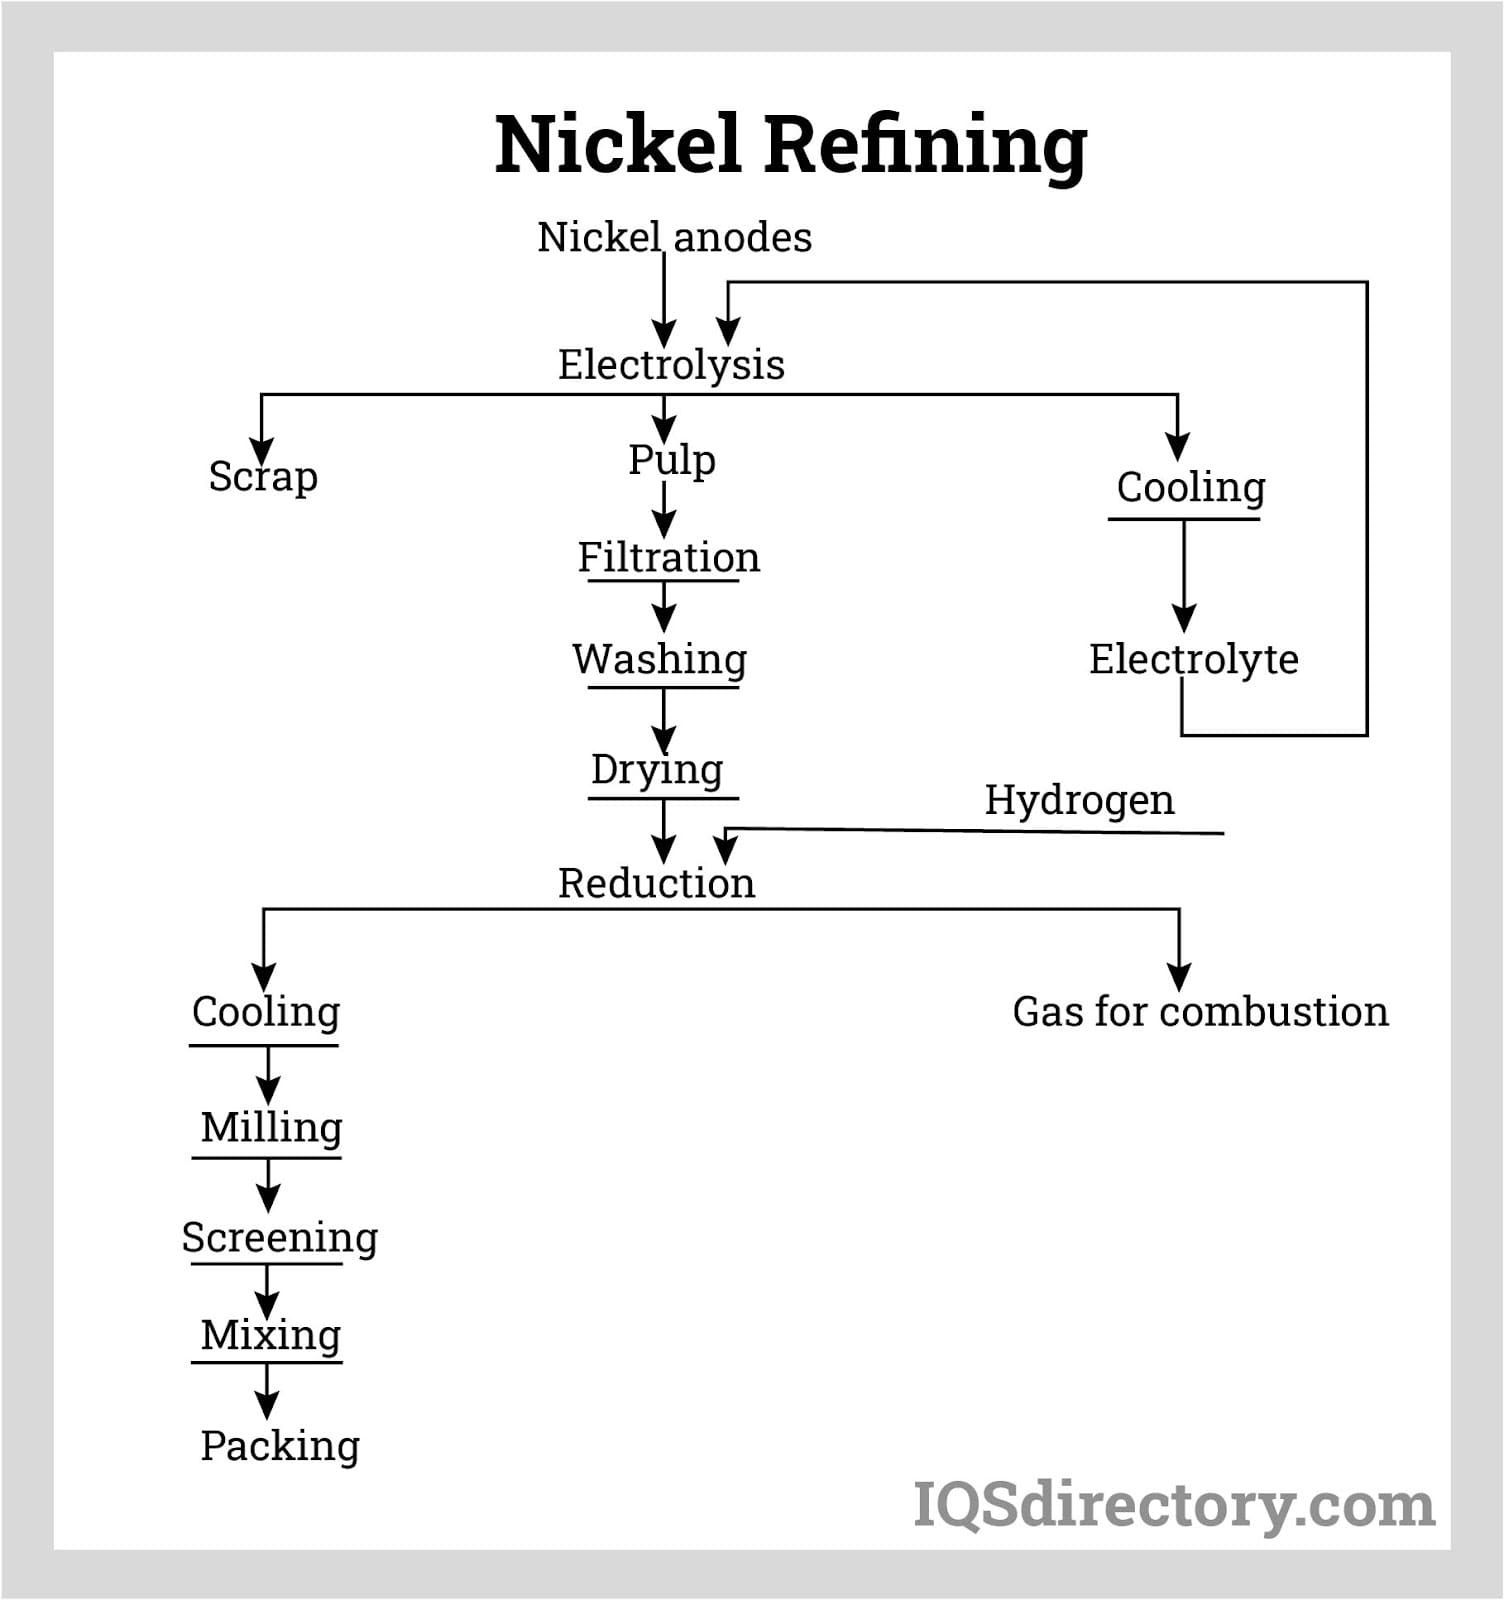 Nickel Refining